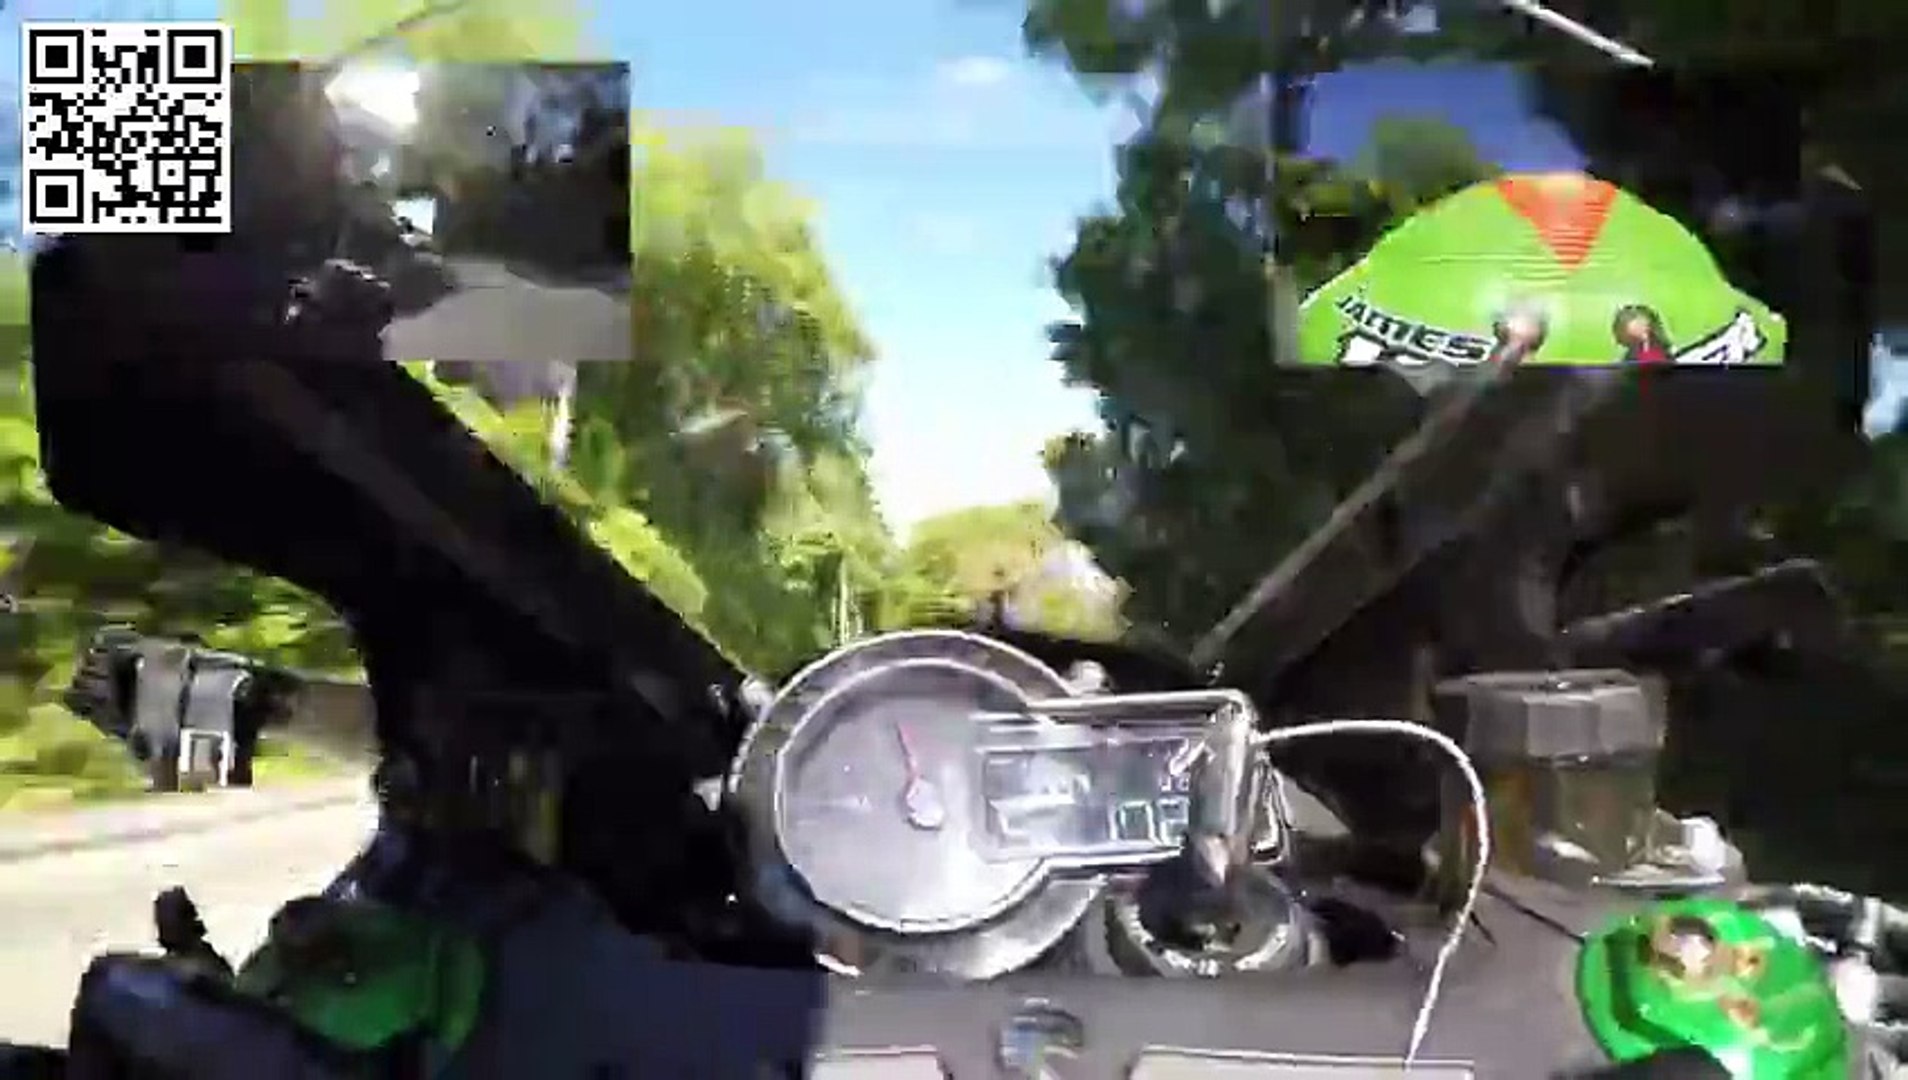 Kawasaki H2R quebra recorde mundial de velocidade a 331 km/h na corrida de moto  mais perigosa do mundo - Vídeo Dailymotion